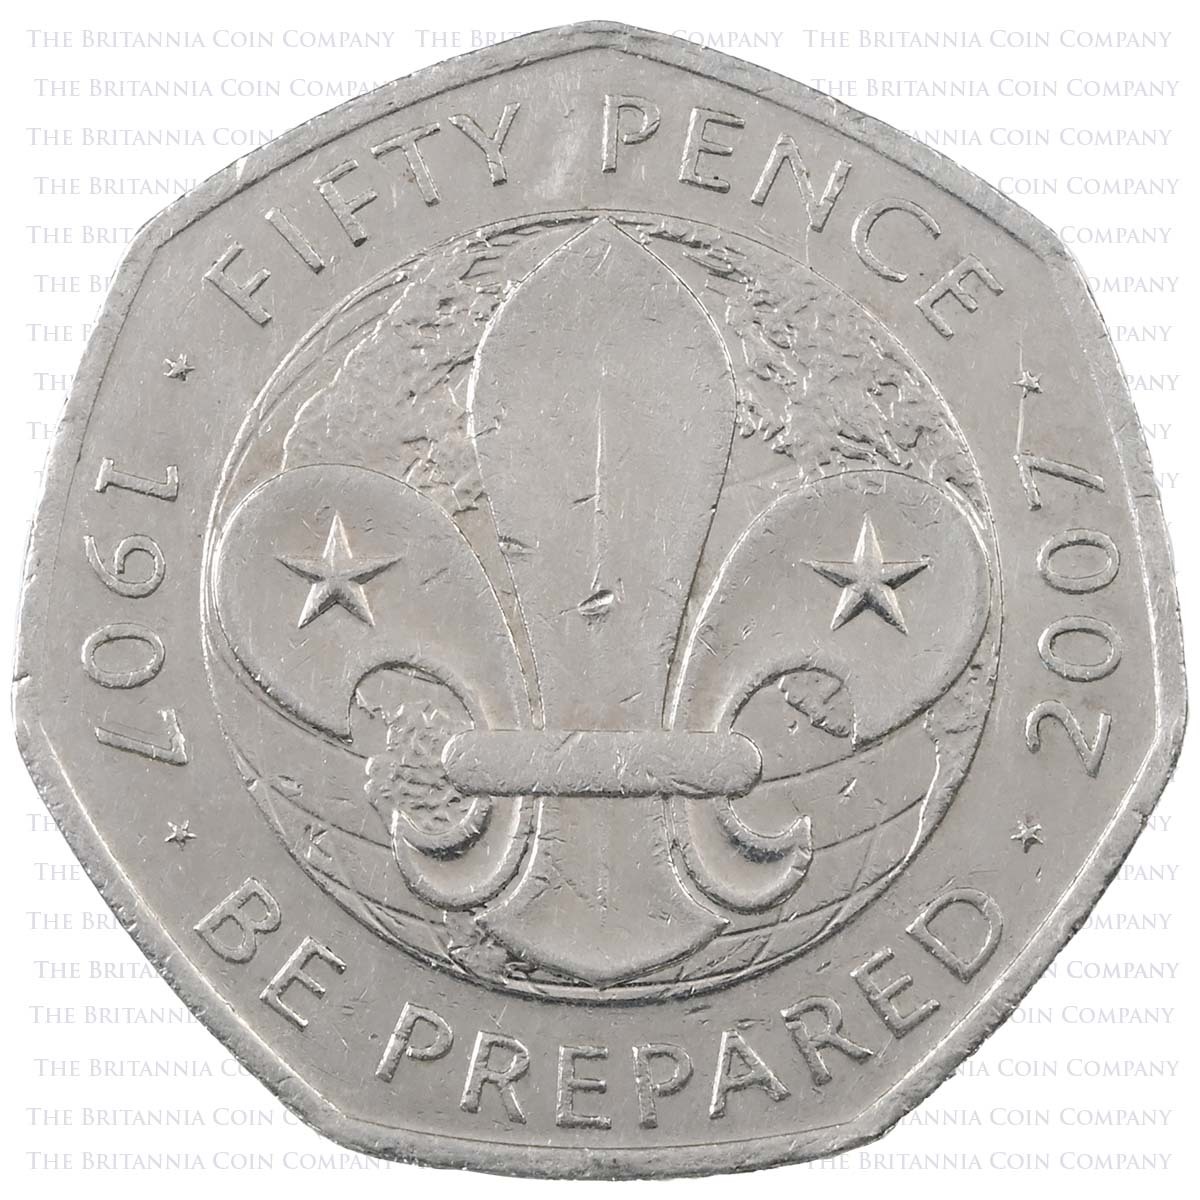 2007 50p coin value